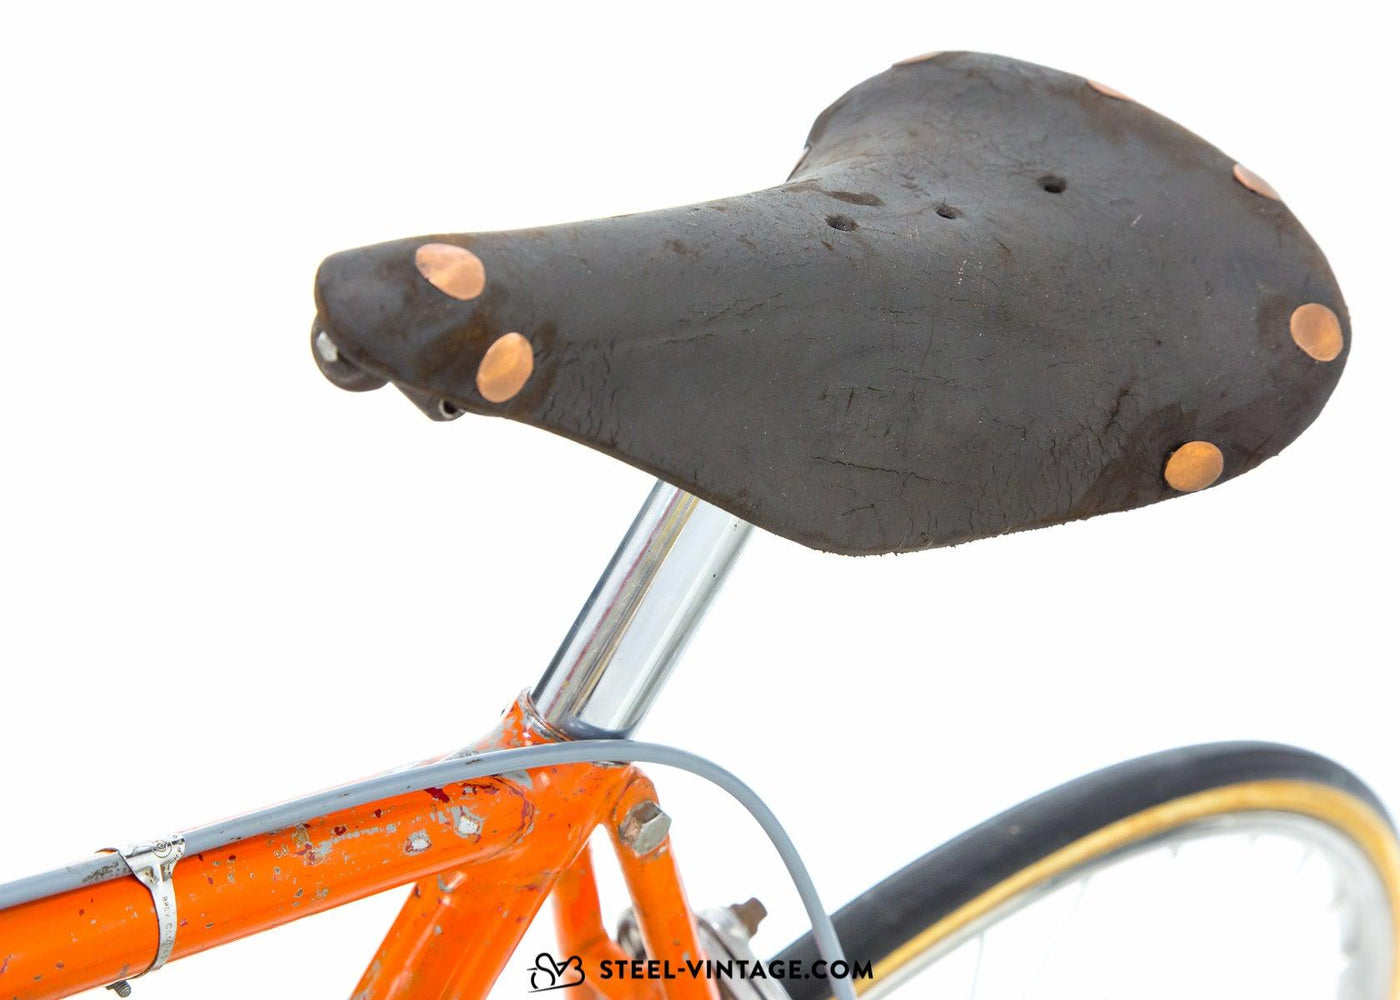 Cinelli Mod. S.C. Super Corsa Classic Road Bike 1960 - Steel Vintage Bikes